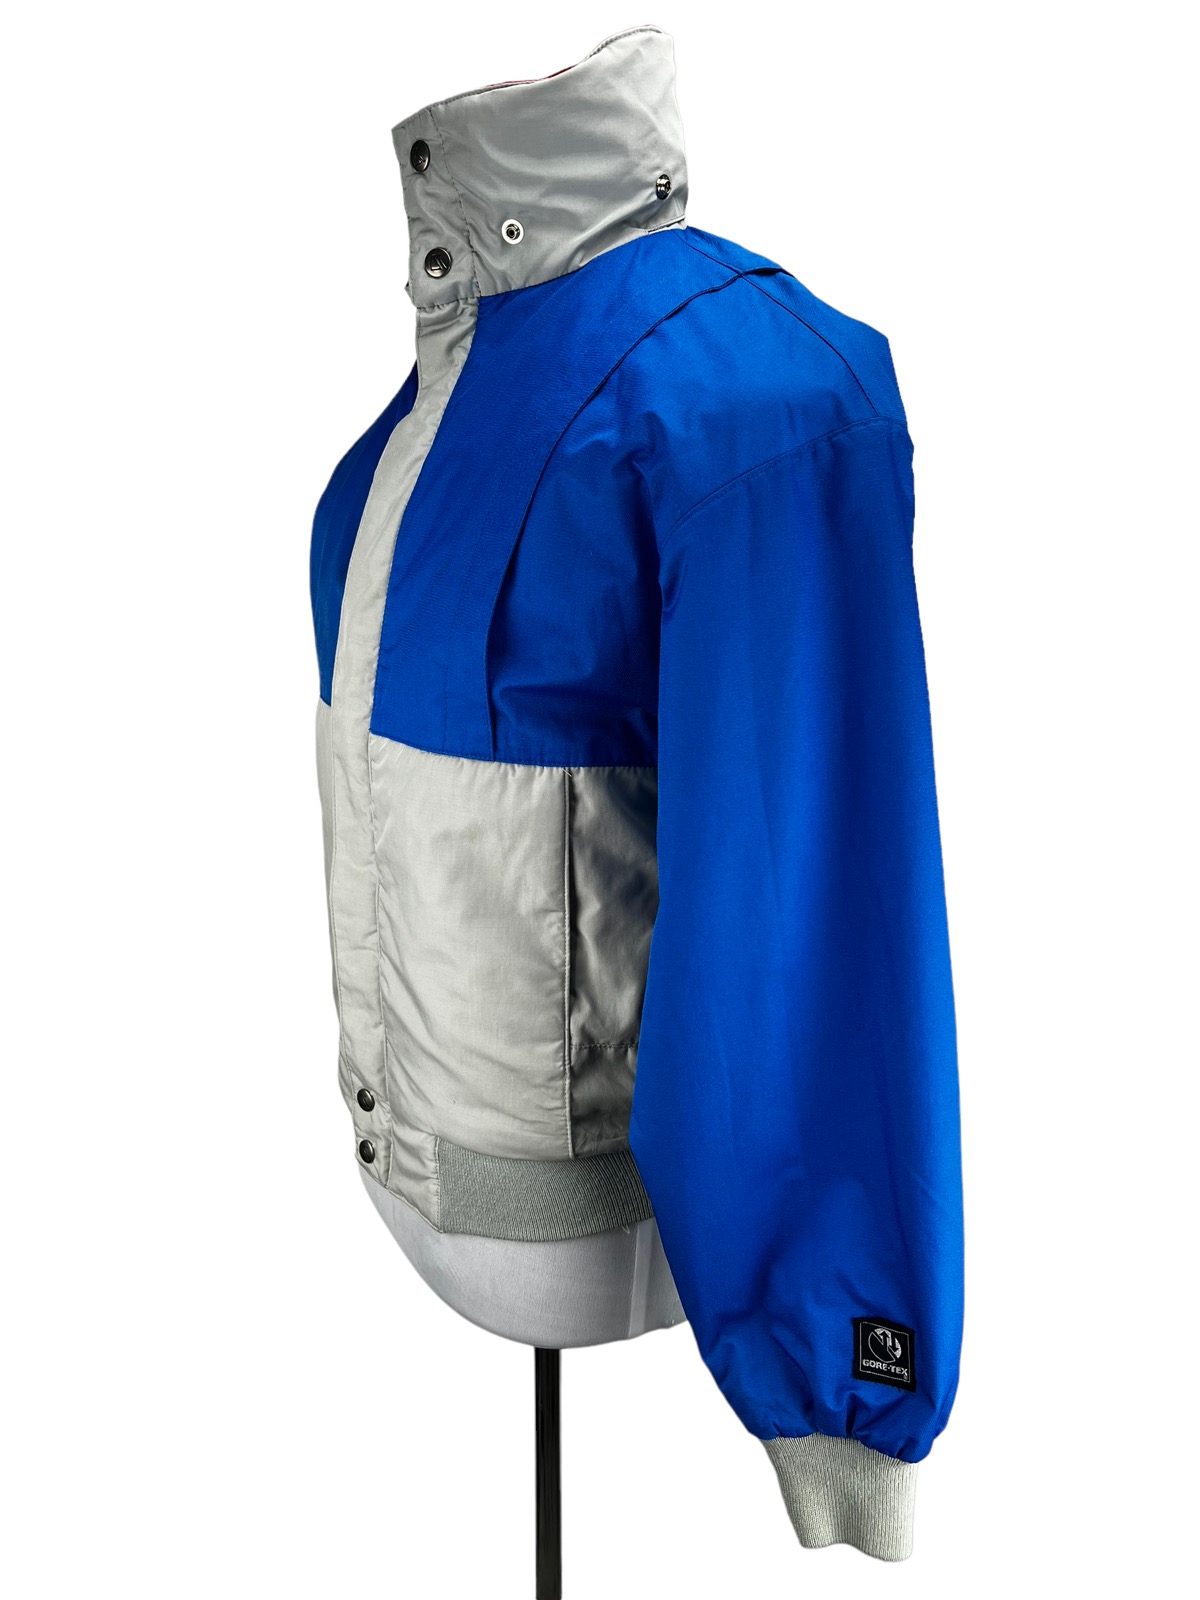 Killy MFD by Asics Gore tex Snowboard Jacket - 5